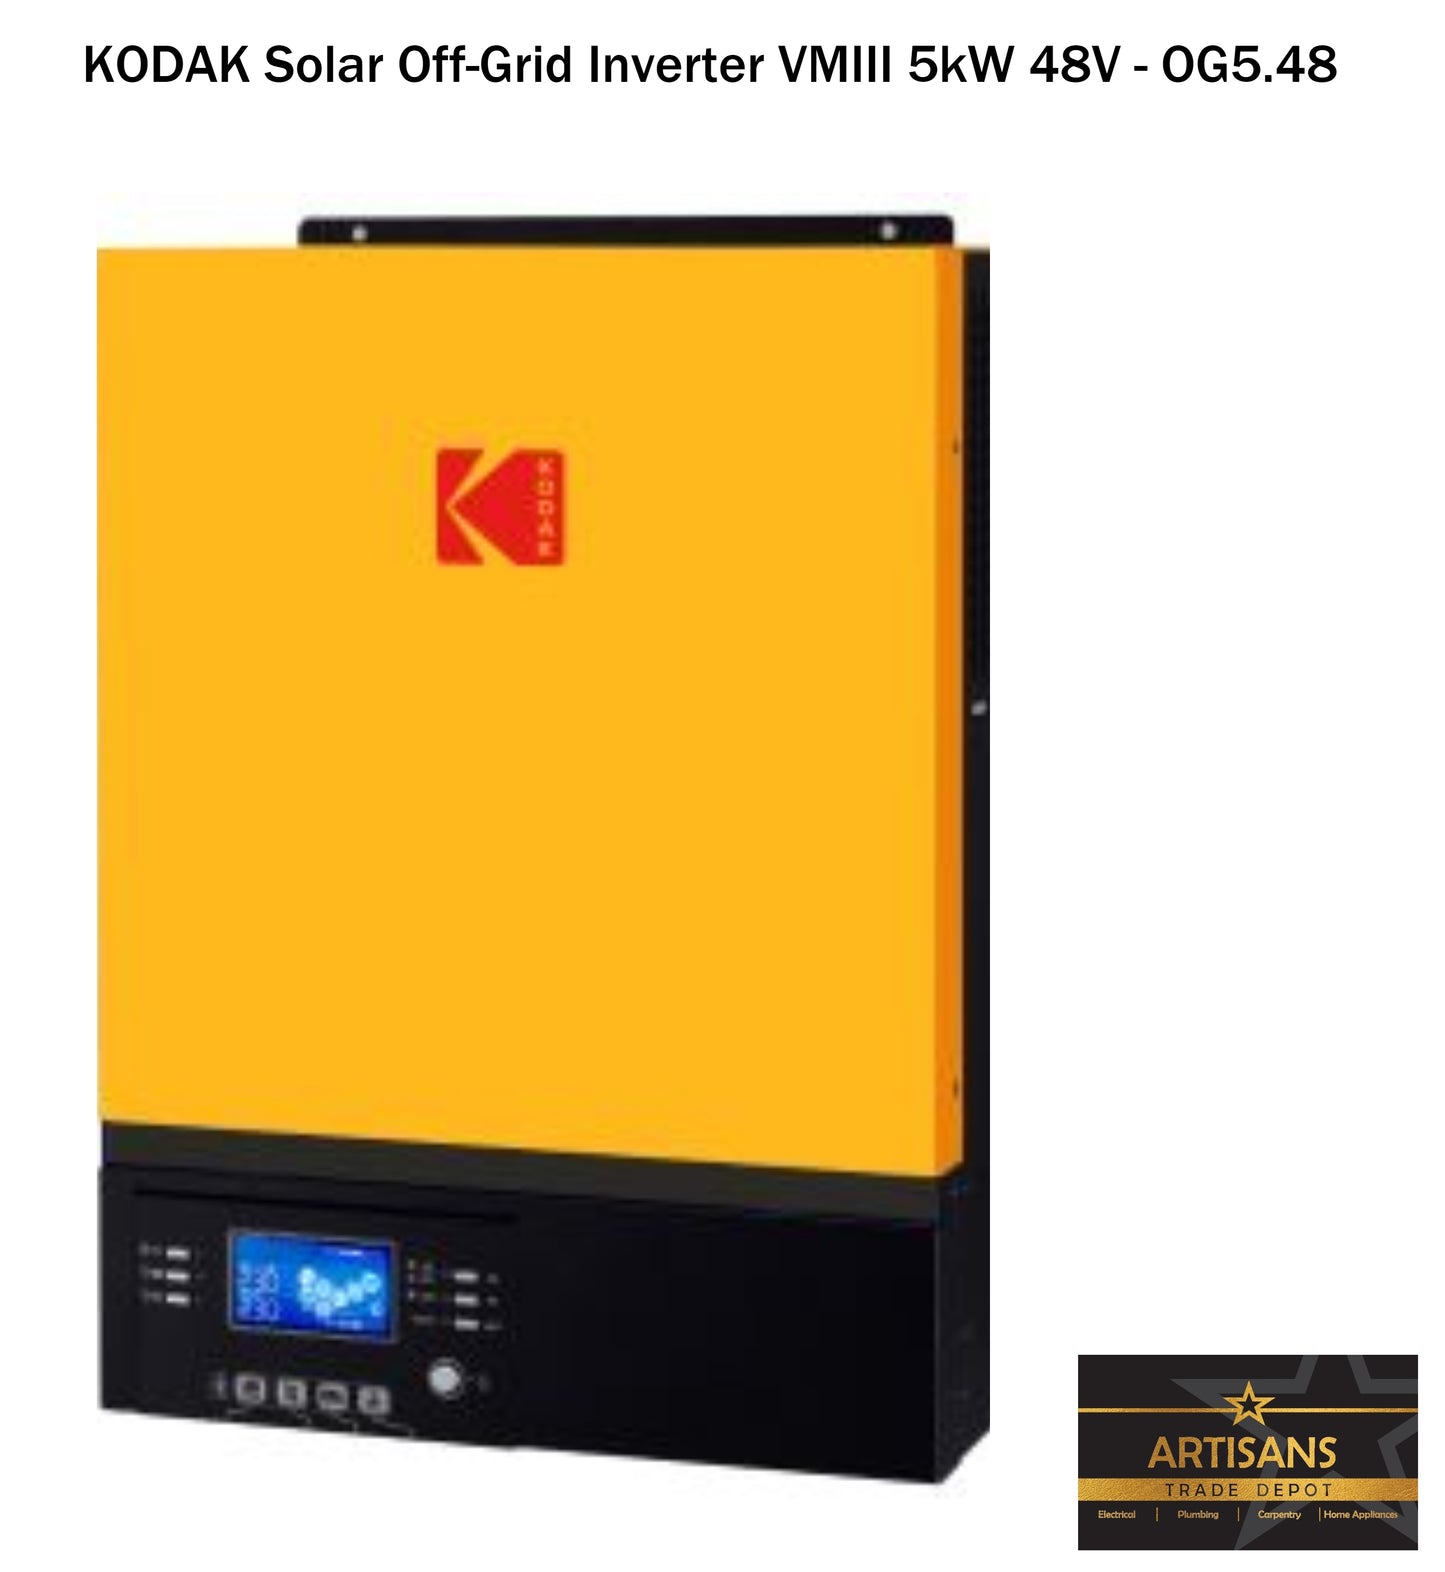 5kW Off Grid Solar Kit 2 - ECO - (PV Panels, Inverter & Lithium Ion Battery) - Artisans Trade Depot